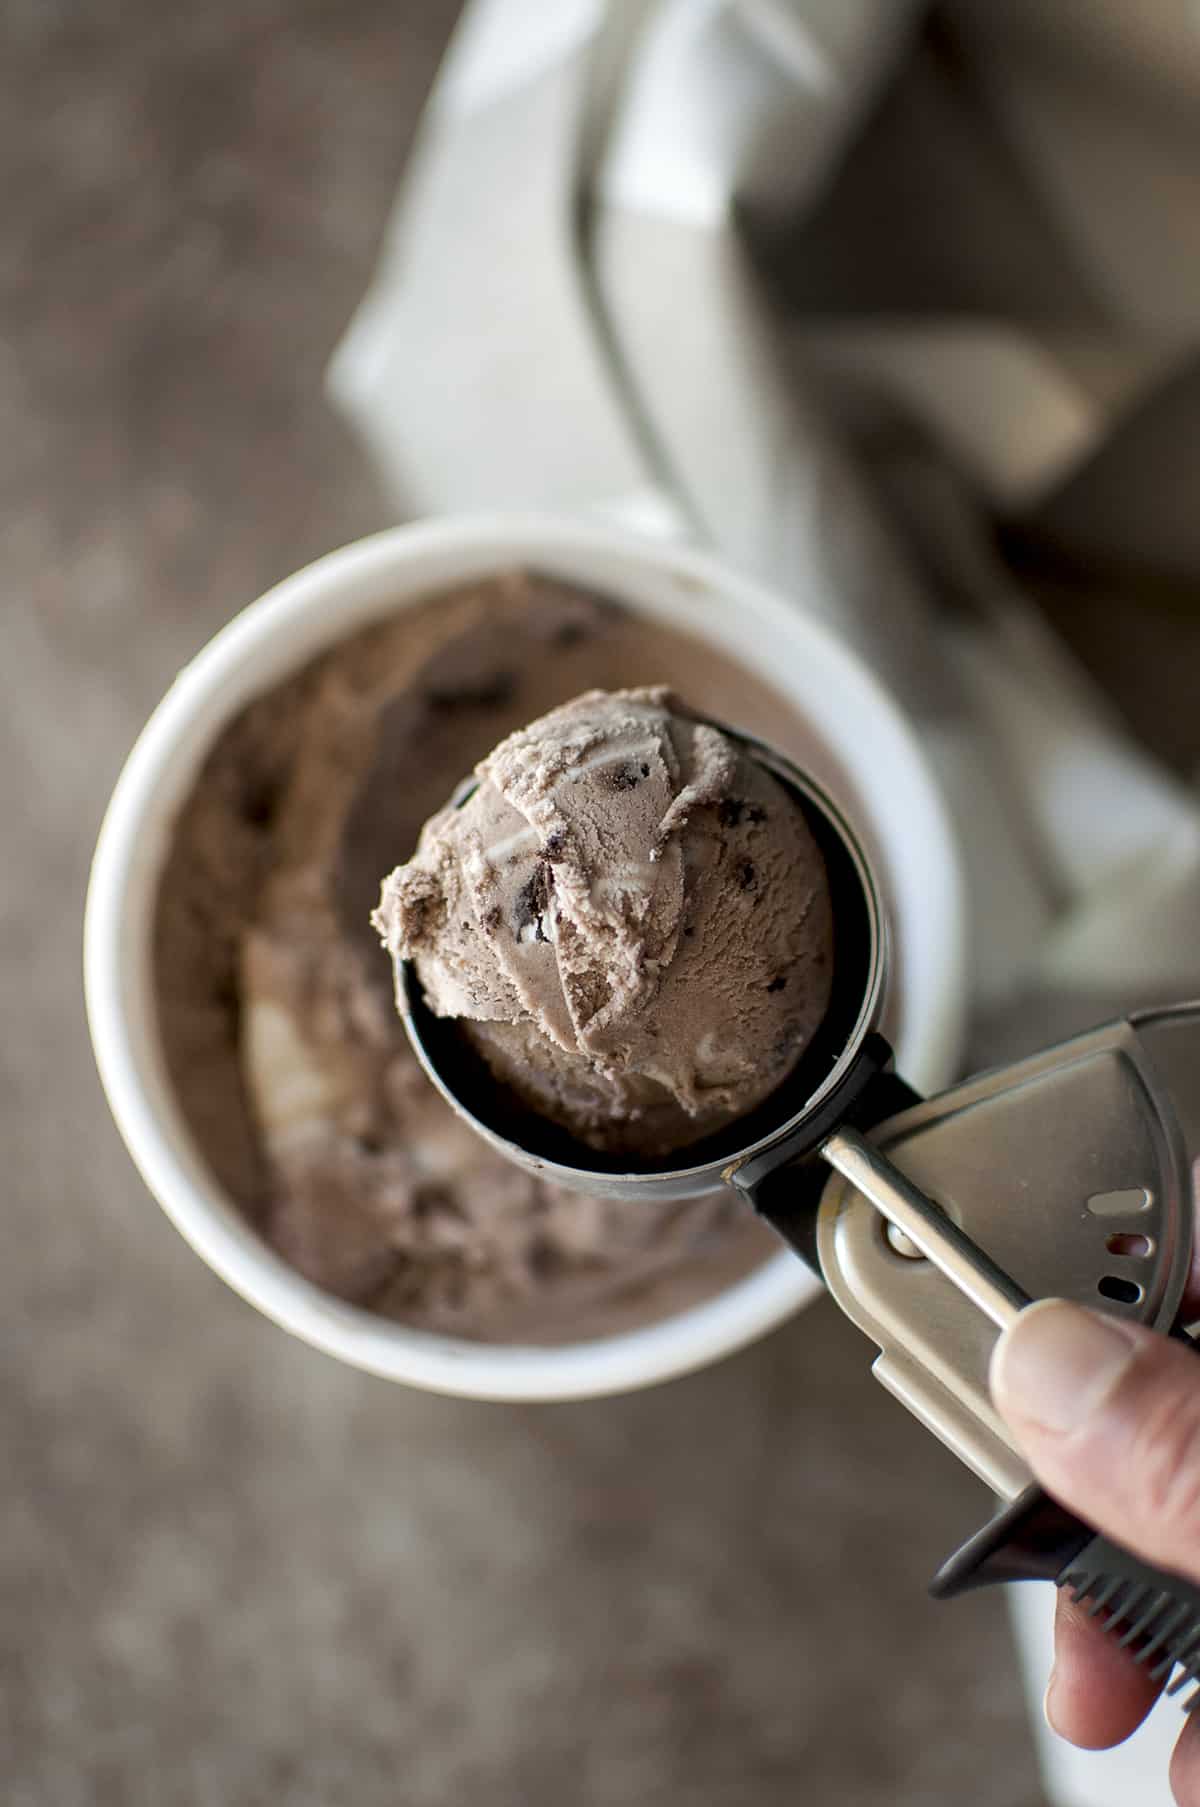 Hand holding a scoop of ice cream